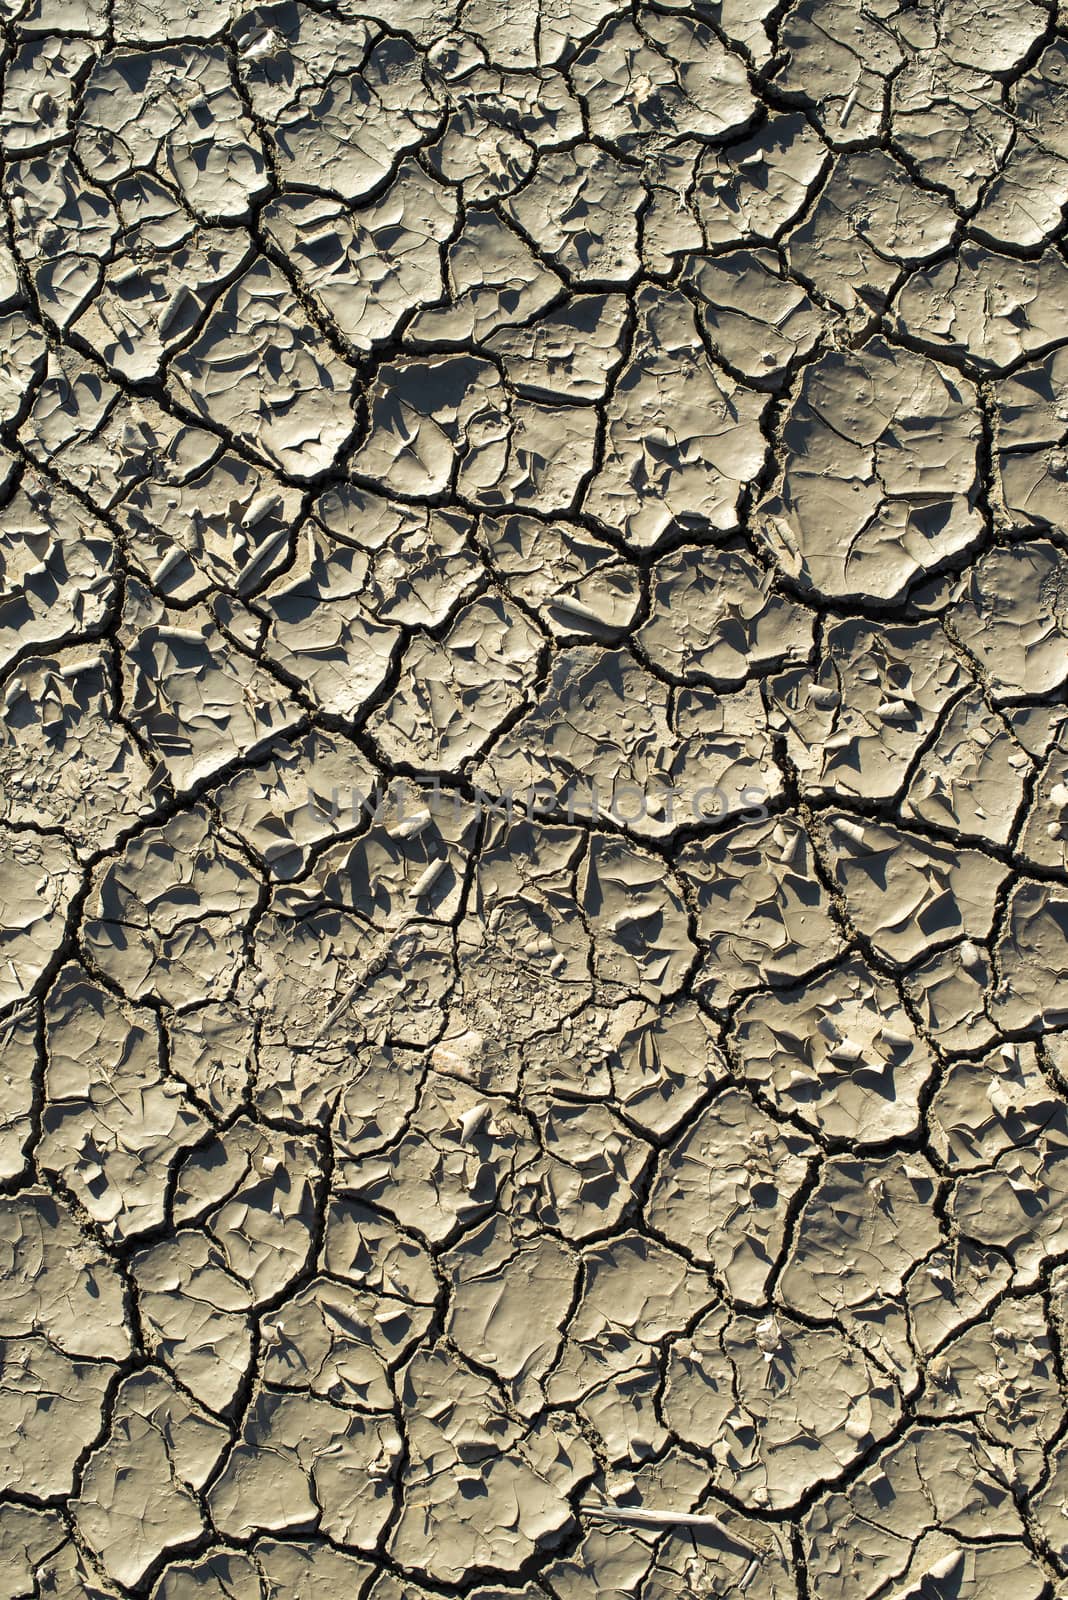 Cracked soil texture. Hard shadows and sun. Dried ground.  by deyan_georgiev